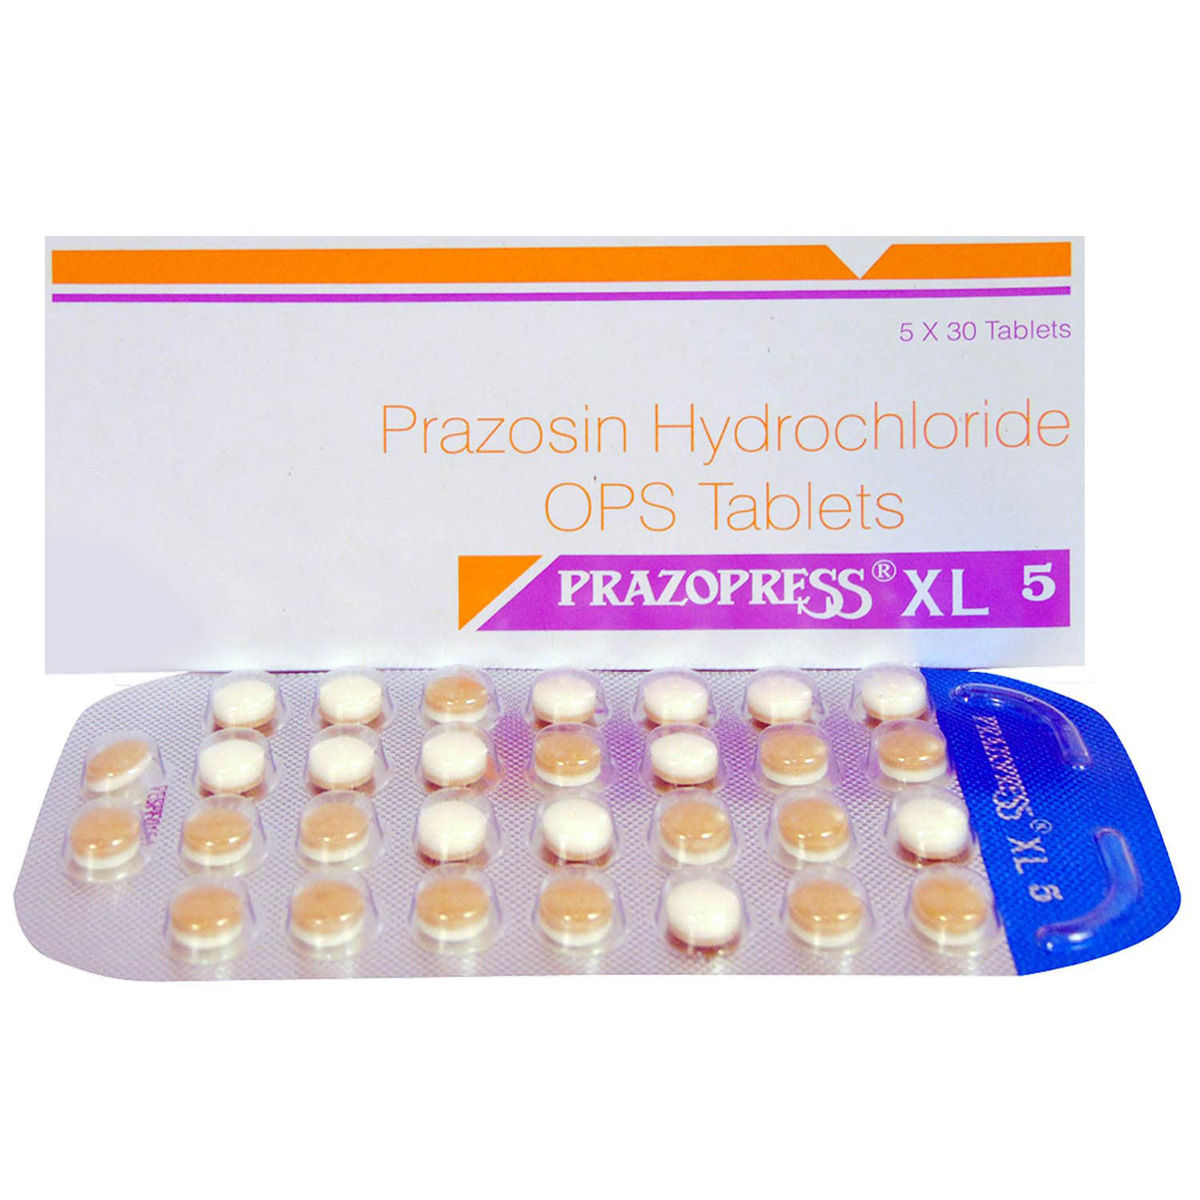 Prazopress XL 5 Tablet Uses, Side Effects, Price Apollo Pharmacy